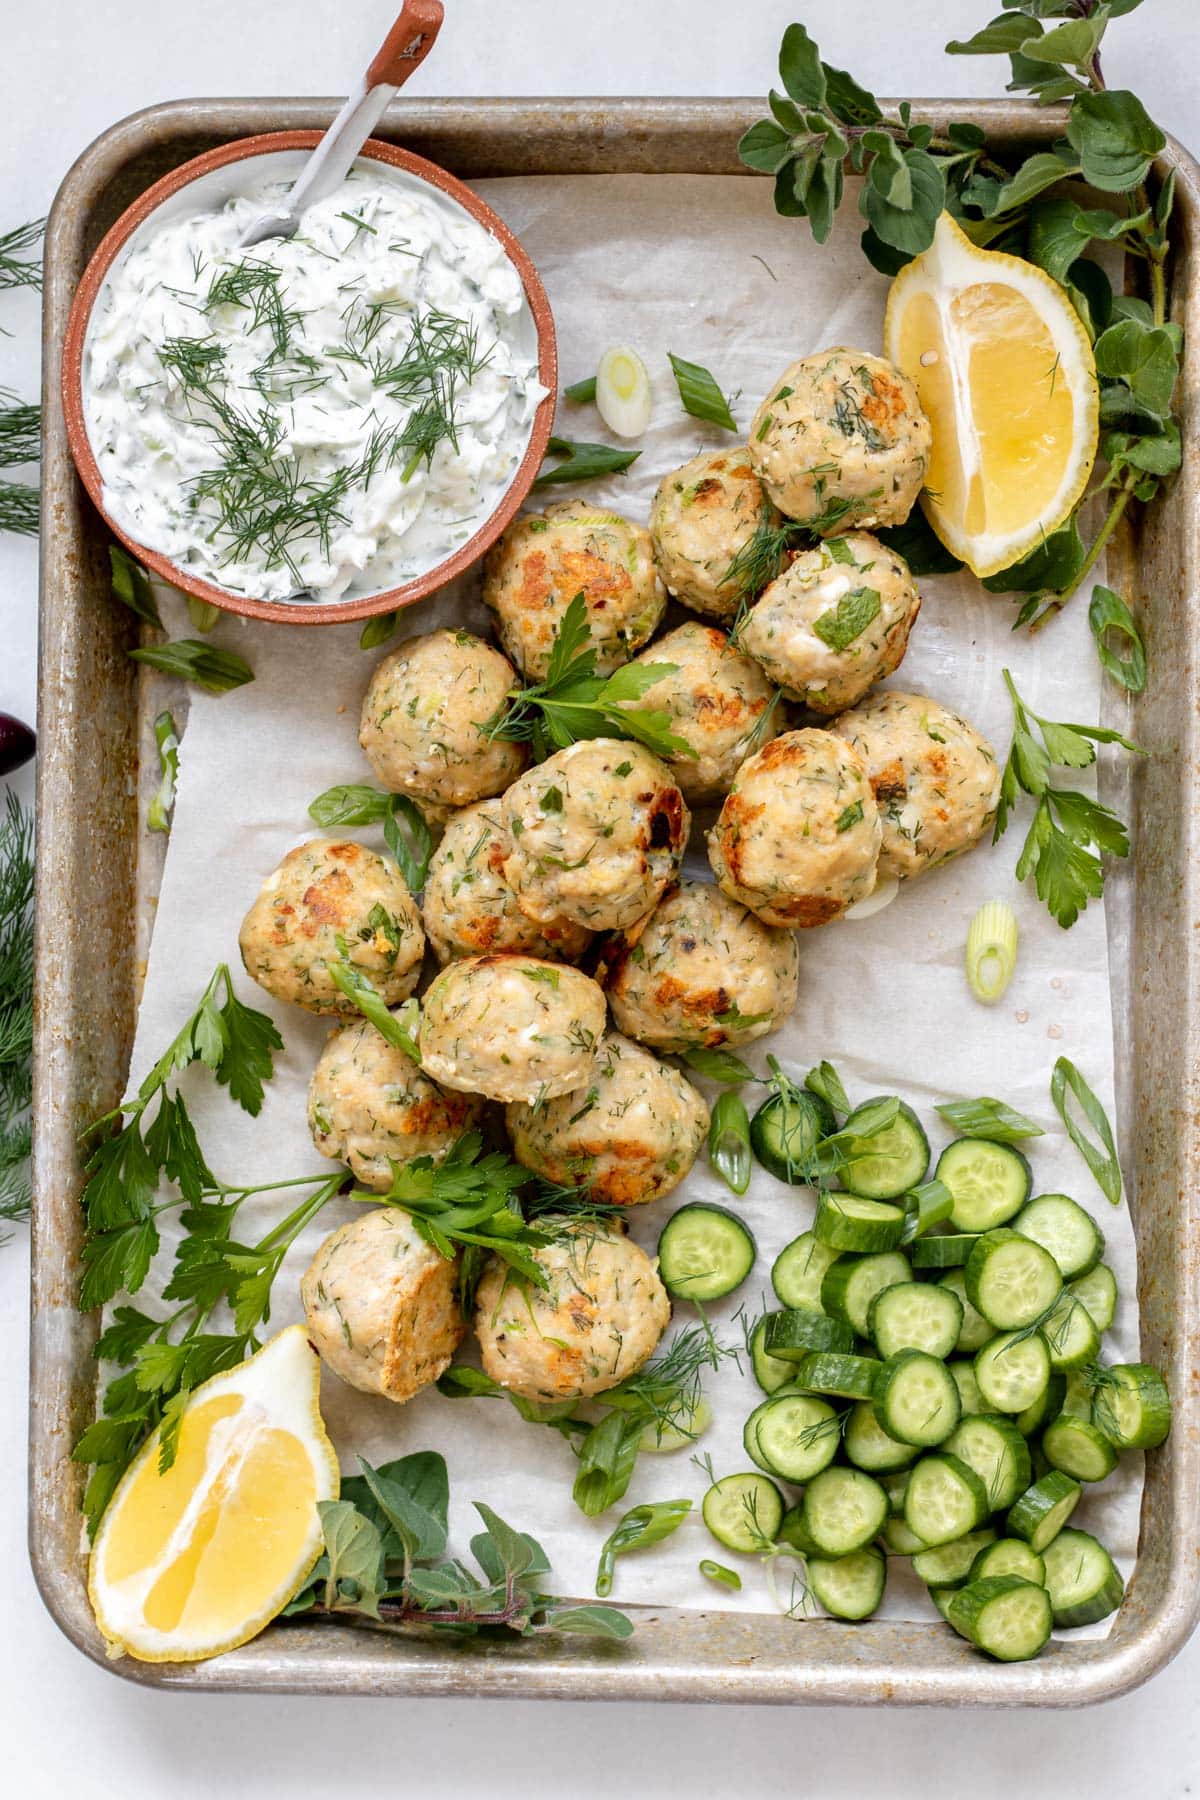 Greek Kale and Quinoa Salad Meal Prep Bowls - Abra's Kitchen